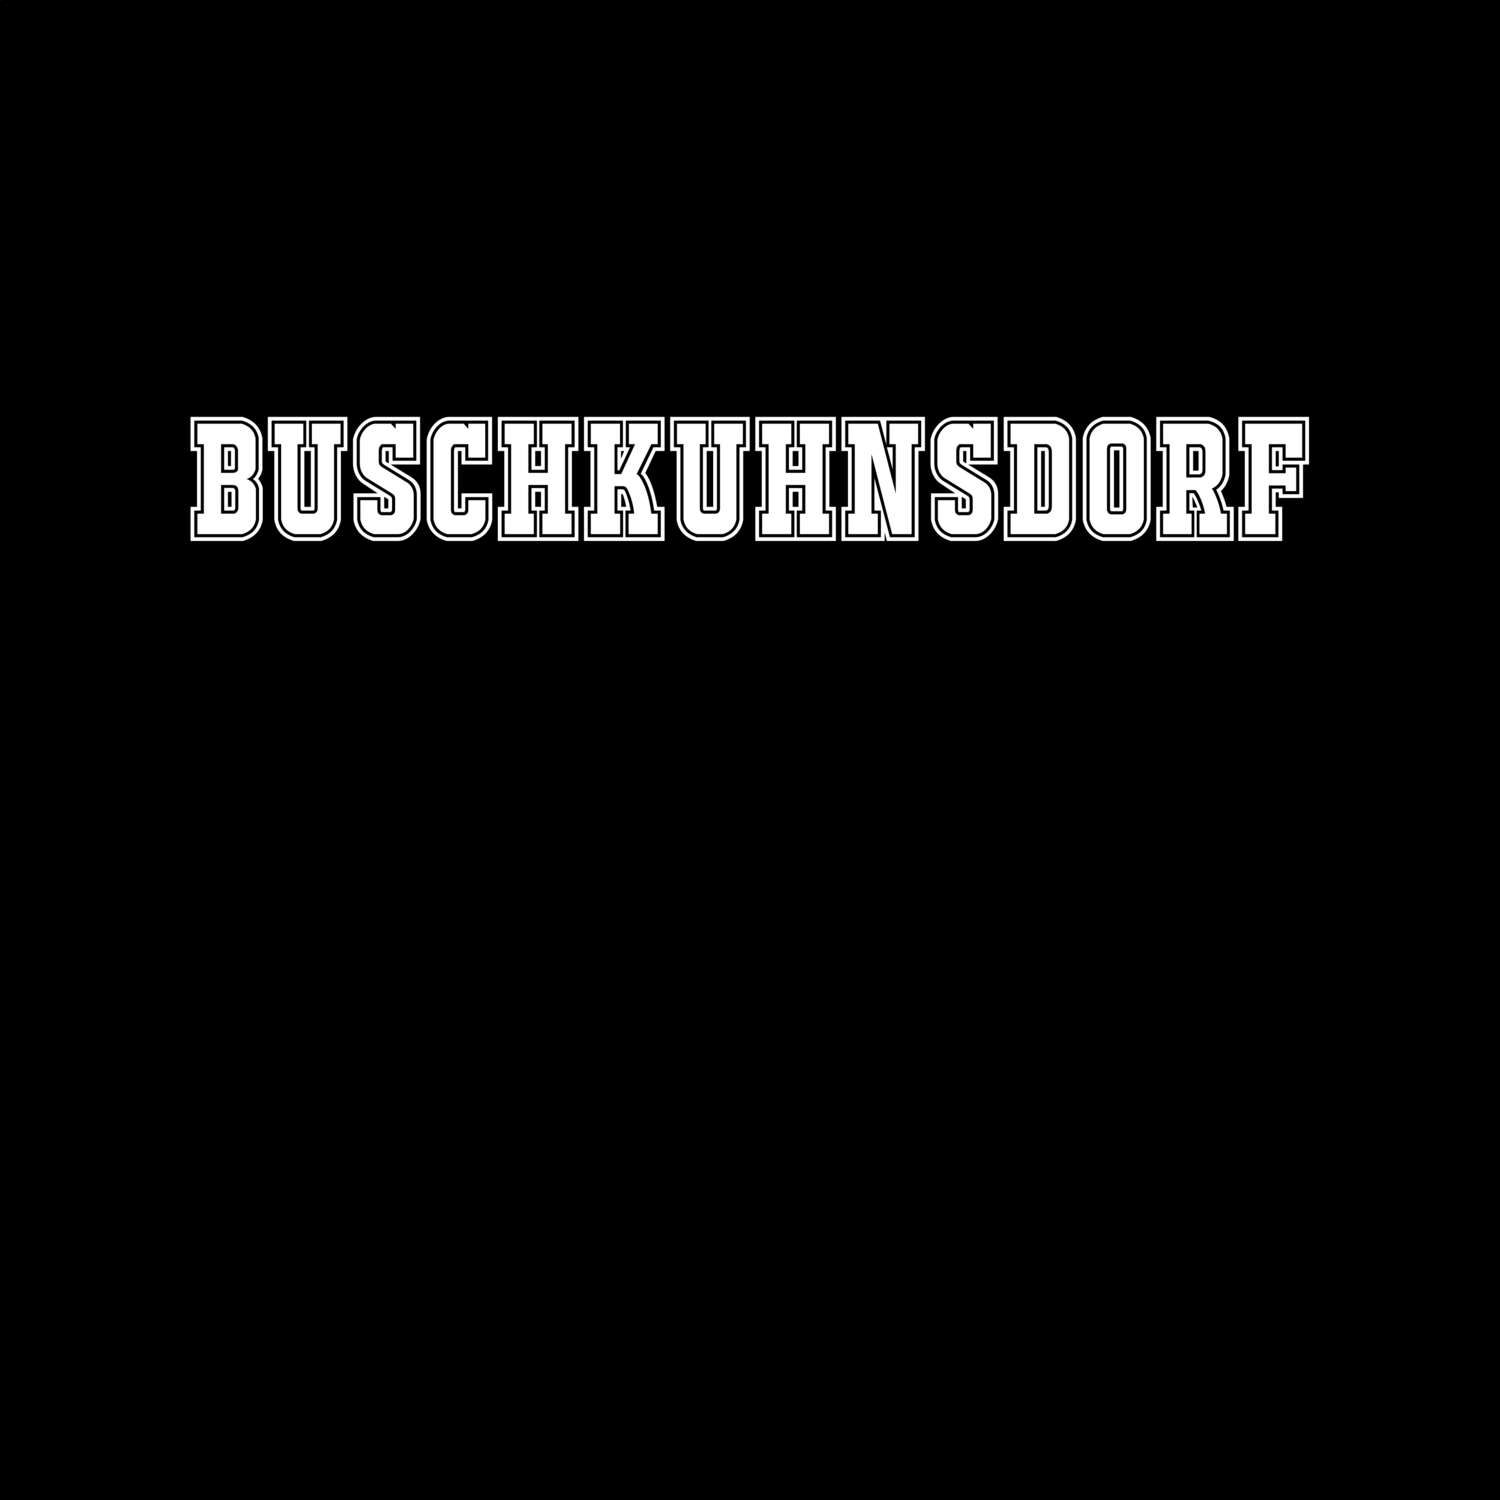 Buschkuhnsdorf T-Shirt »Classic«